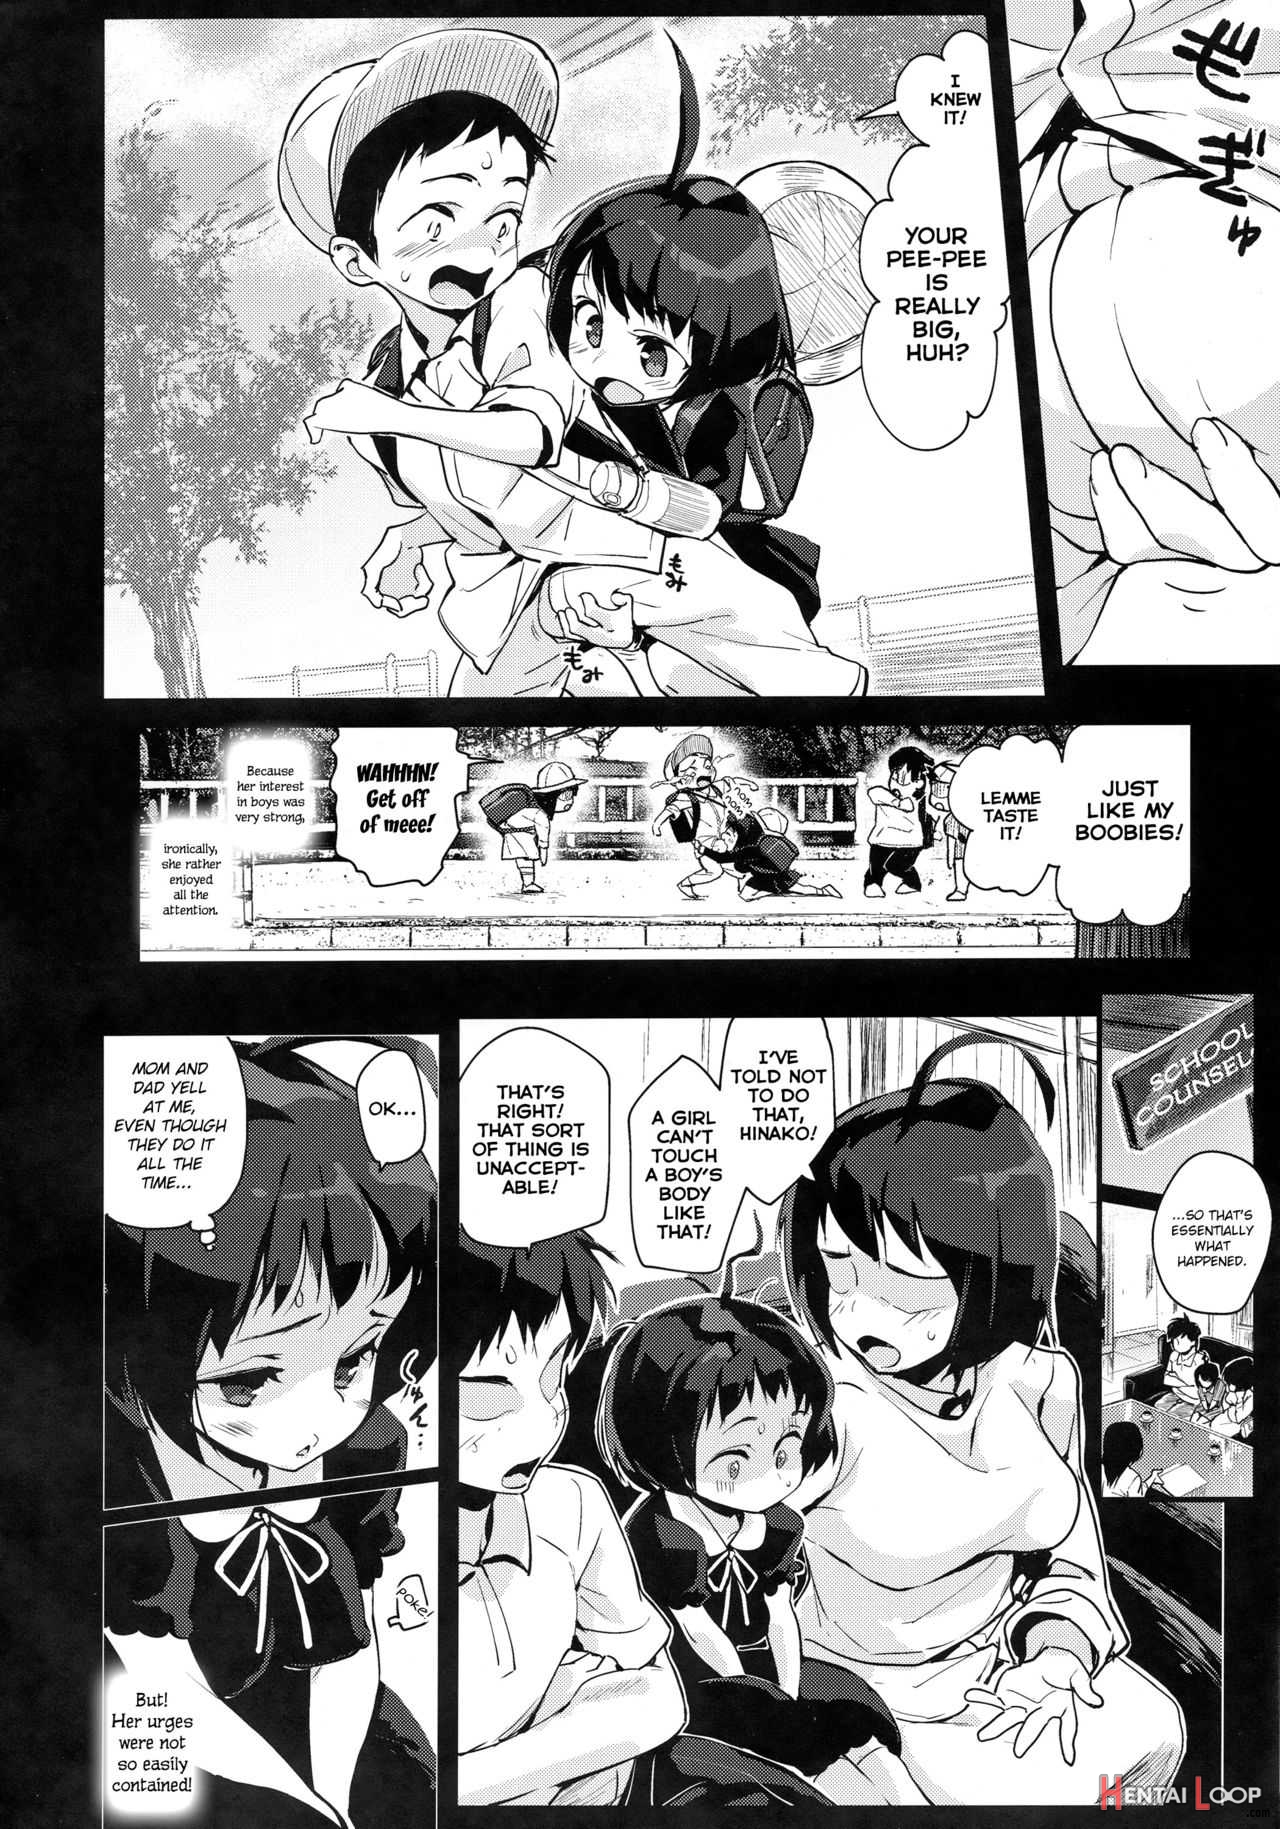 Hinako Rearing Log 2 - Hinako's Past And Present page 6